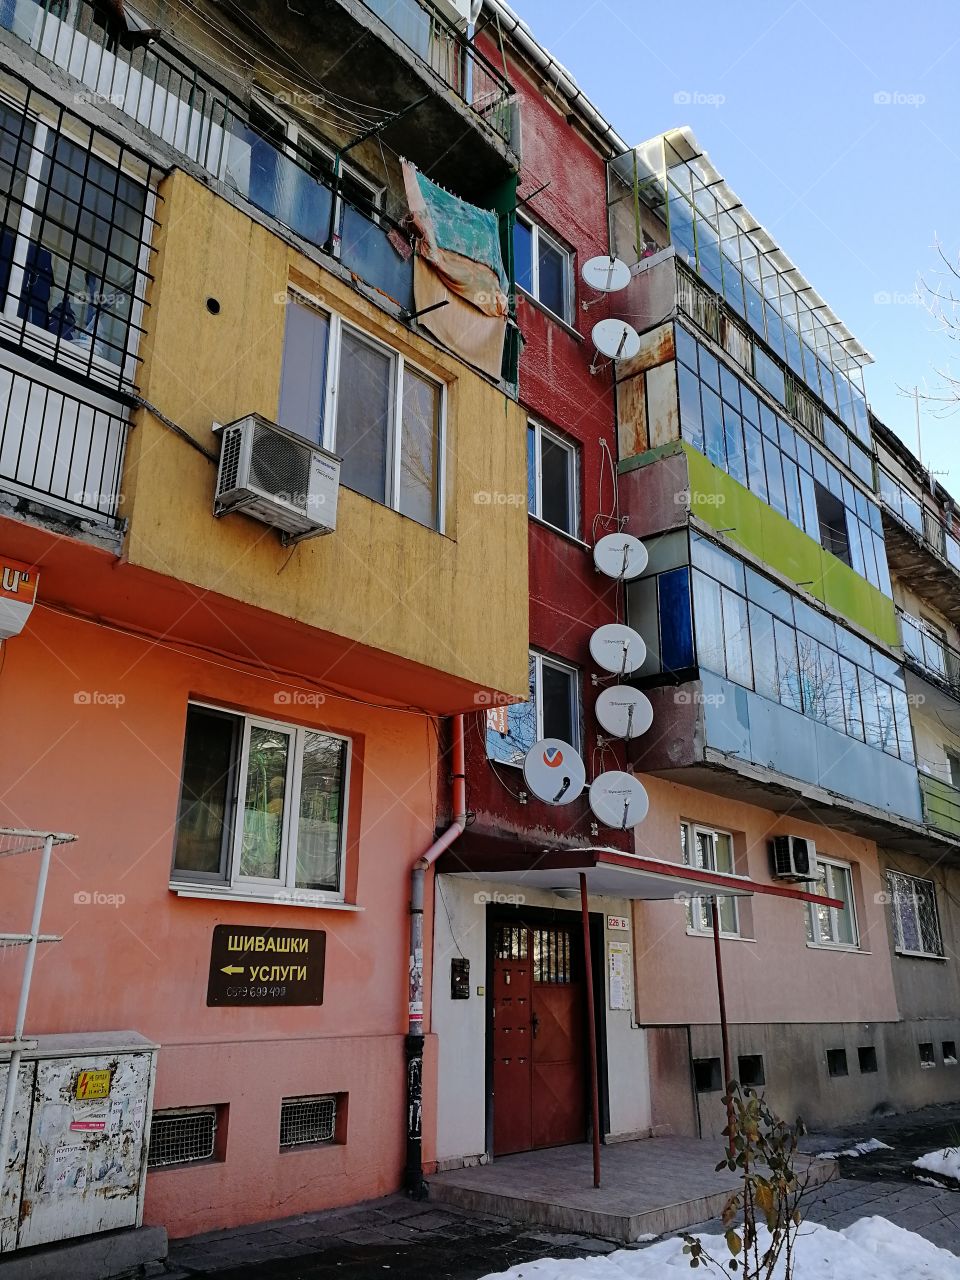 Antennamultifamily housing